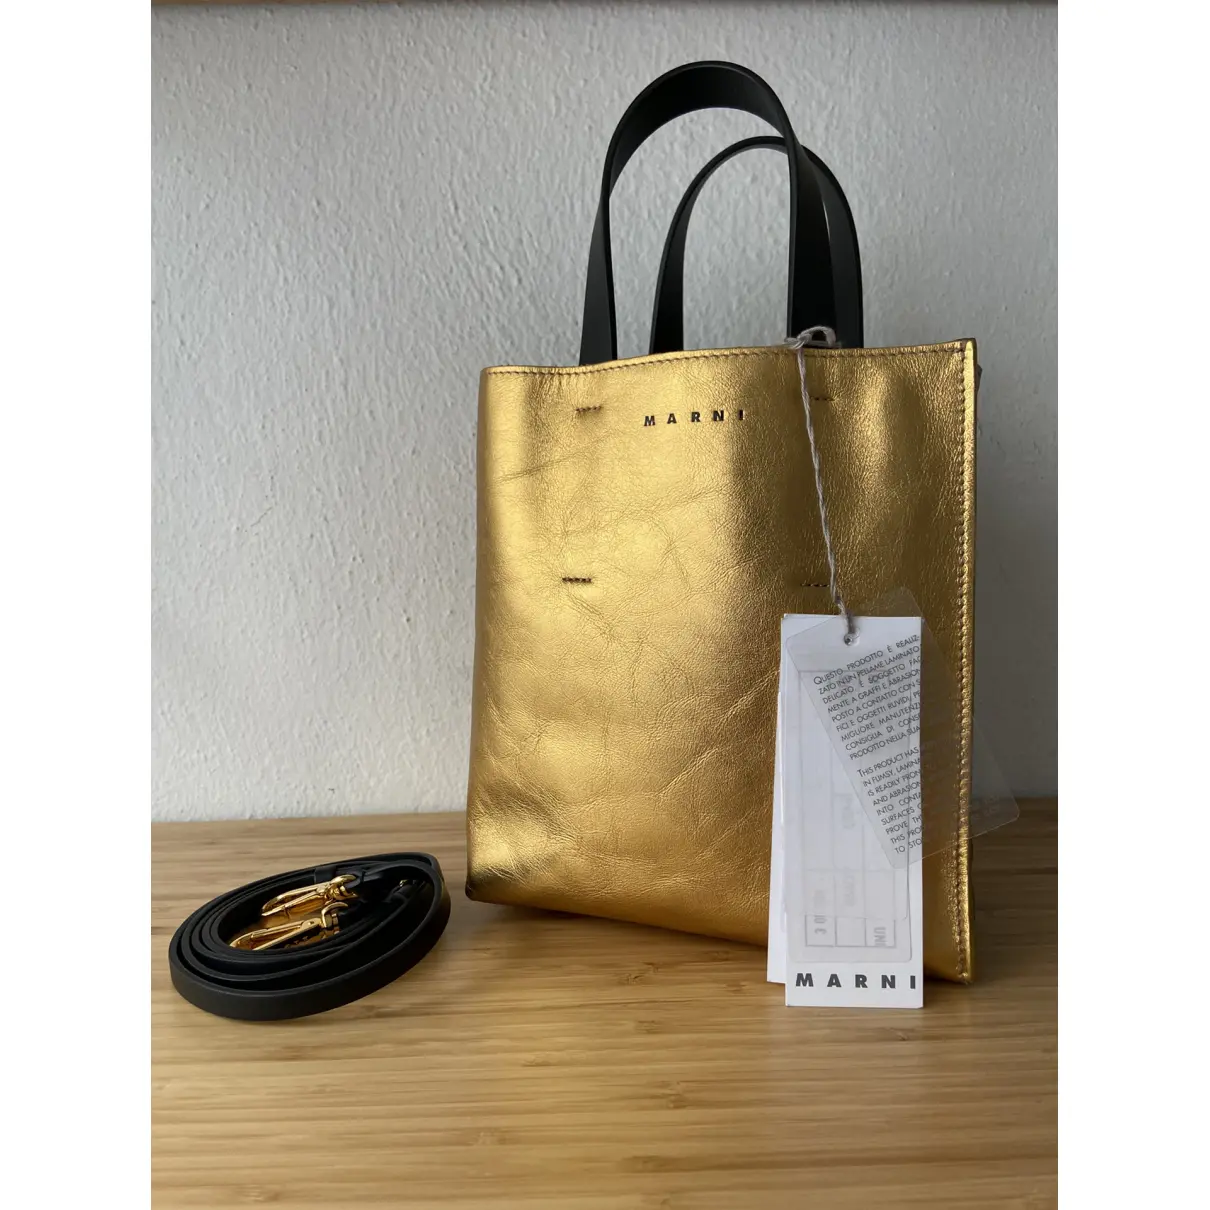 Buy Marni Museo leather crossbody bag online